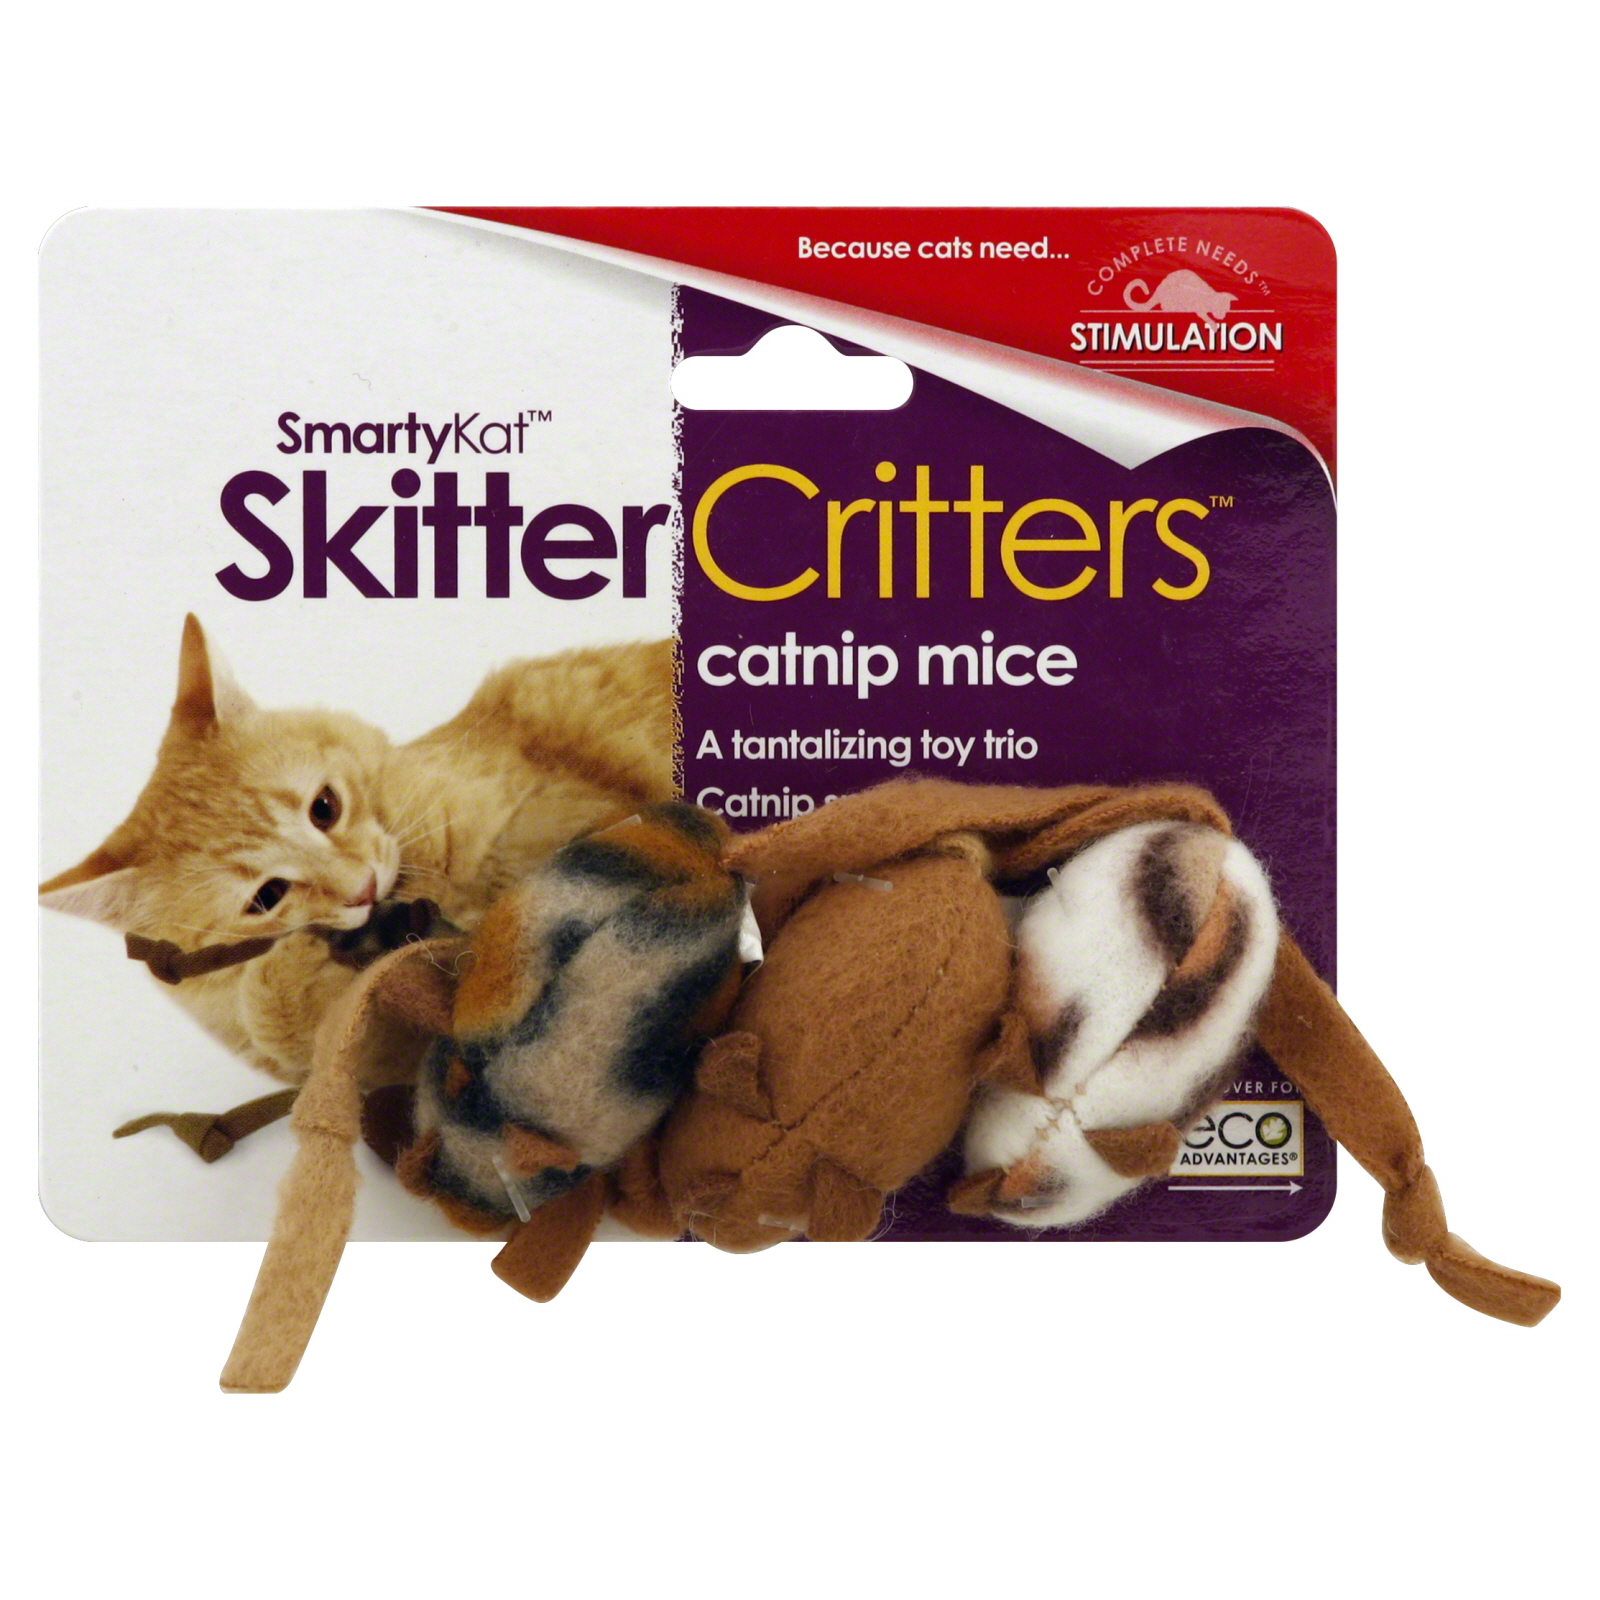 SmartyKat Skitter Critters Catnip Mice, 1 toy